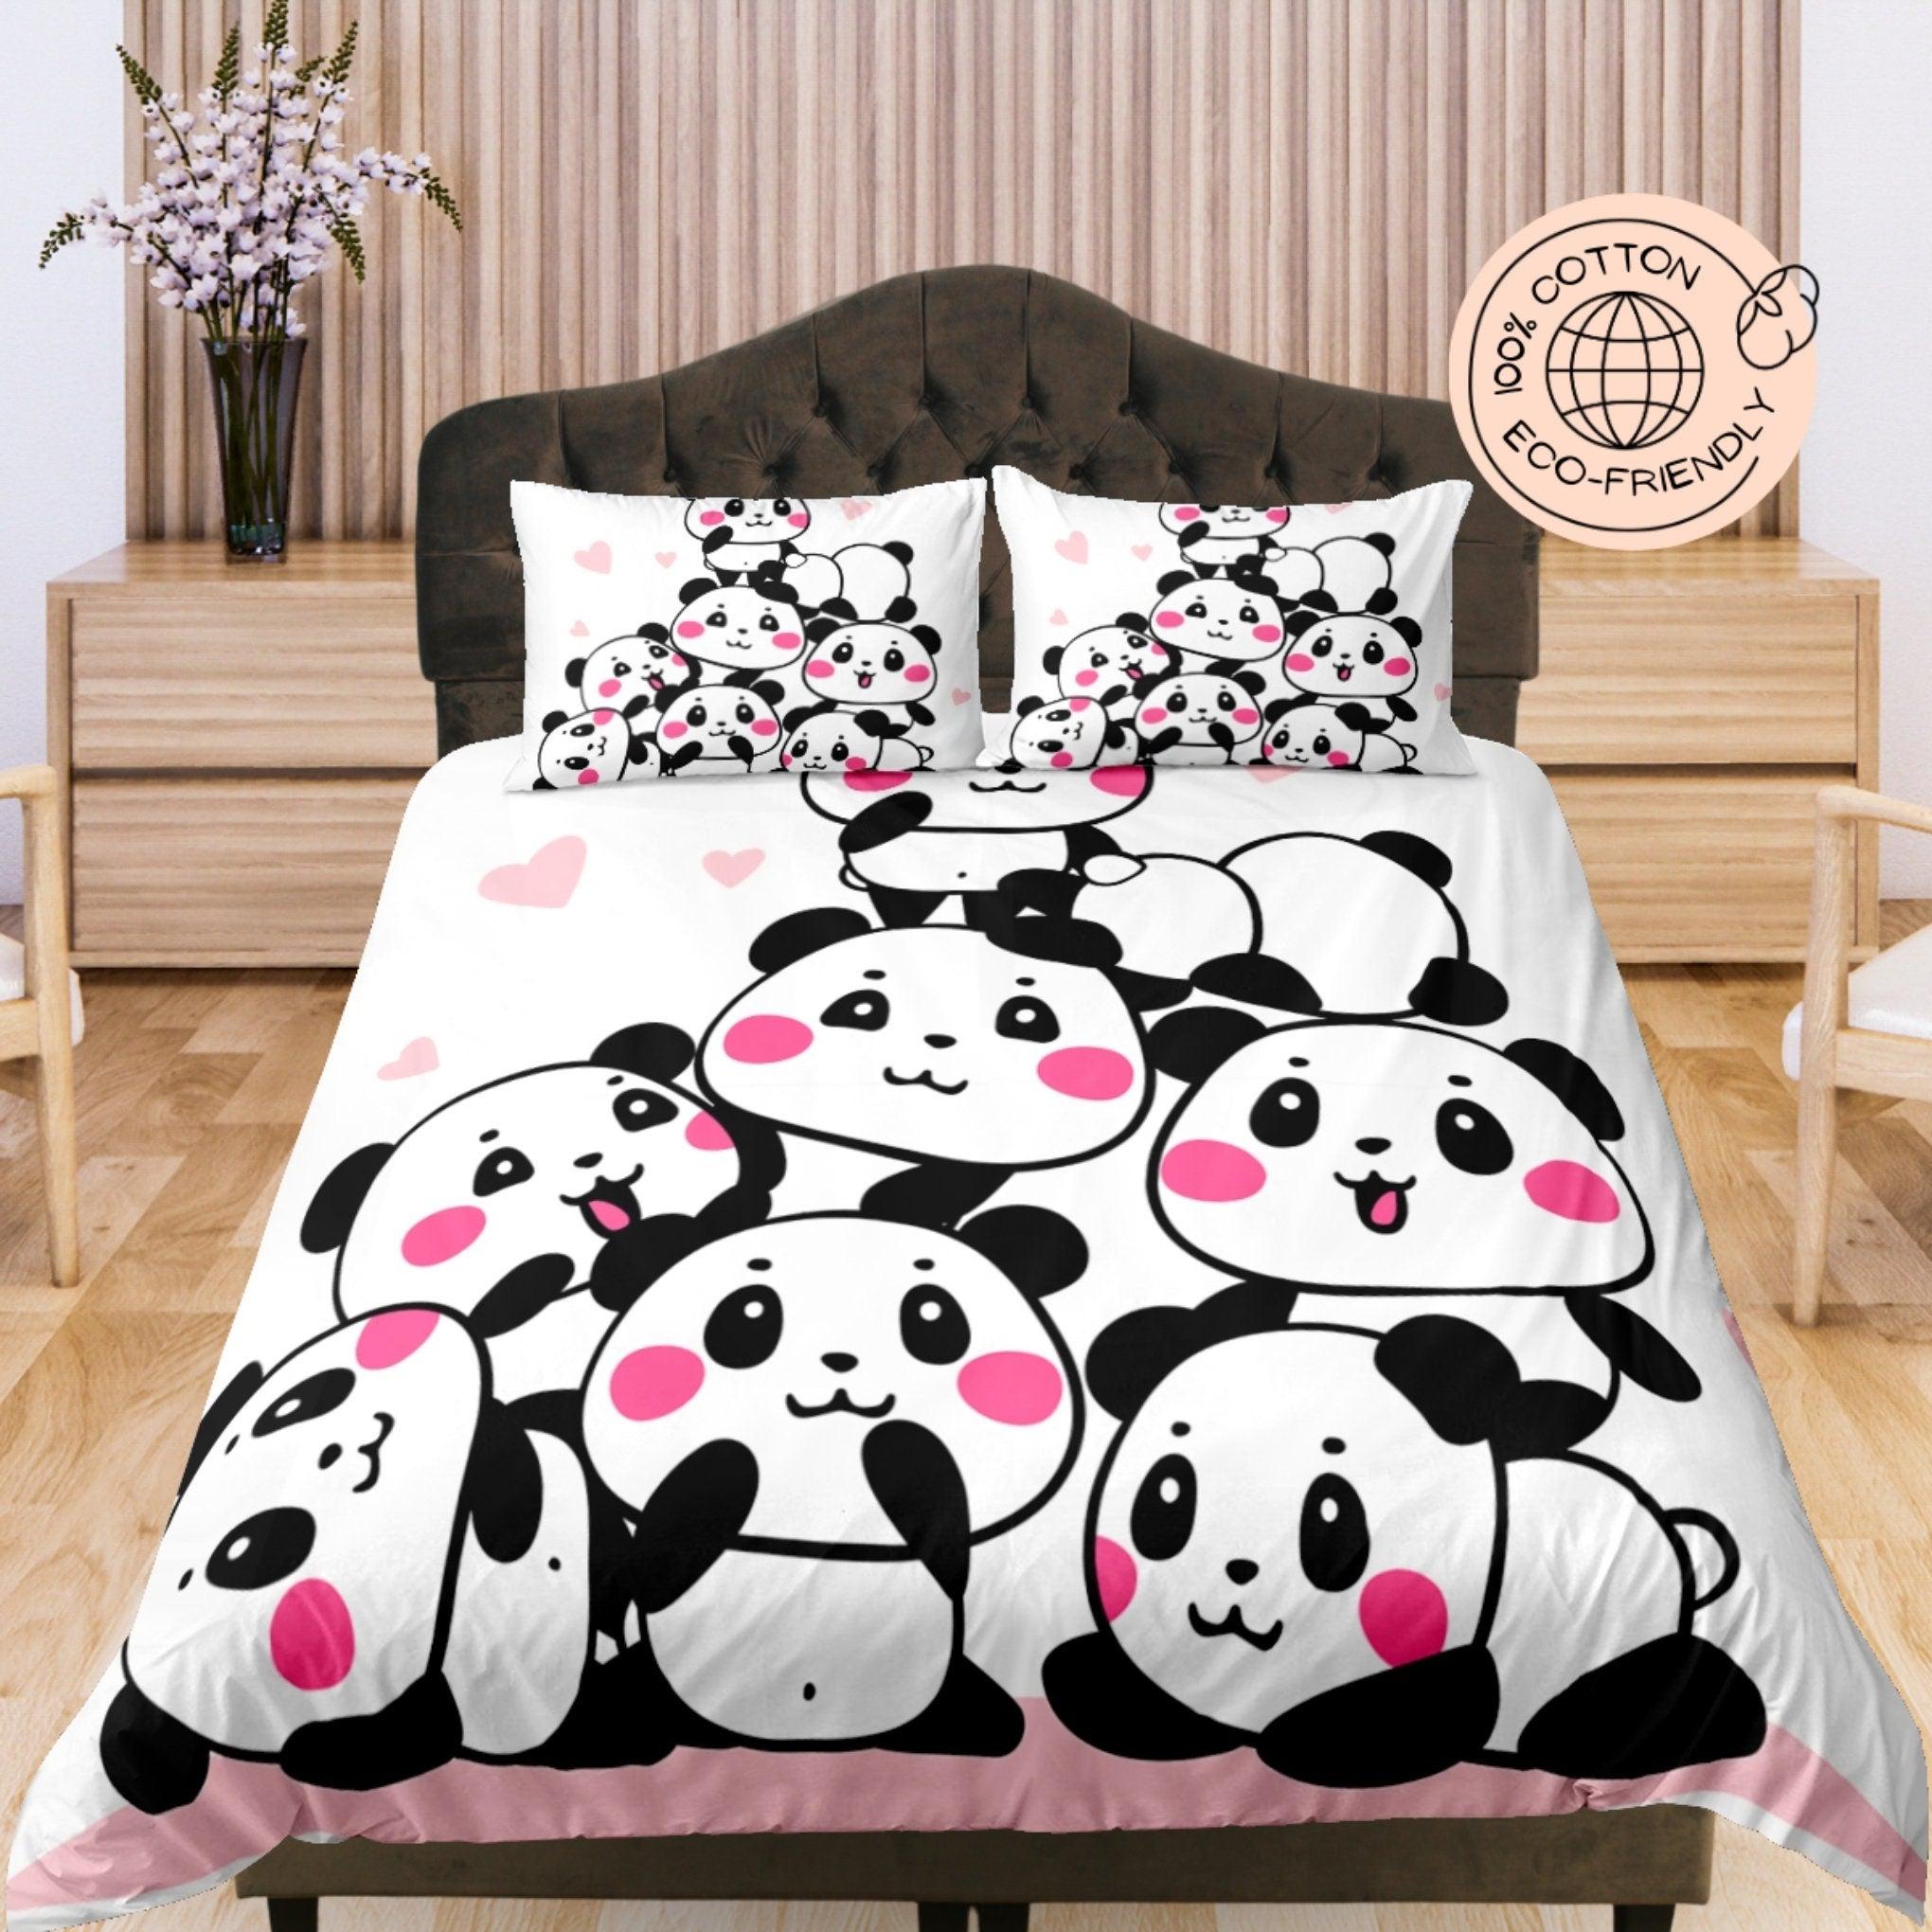 daintyduvet Kawaii Baby Pandas Cute White Cotton Duvet Cover Set for Kids, Toddler Bedding, Baby Zipper Bedding, Nursery Cotton Bedding, Crib Blanket